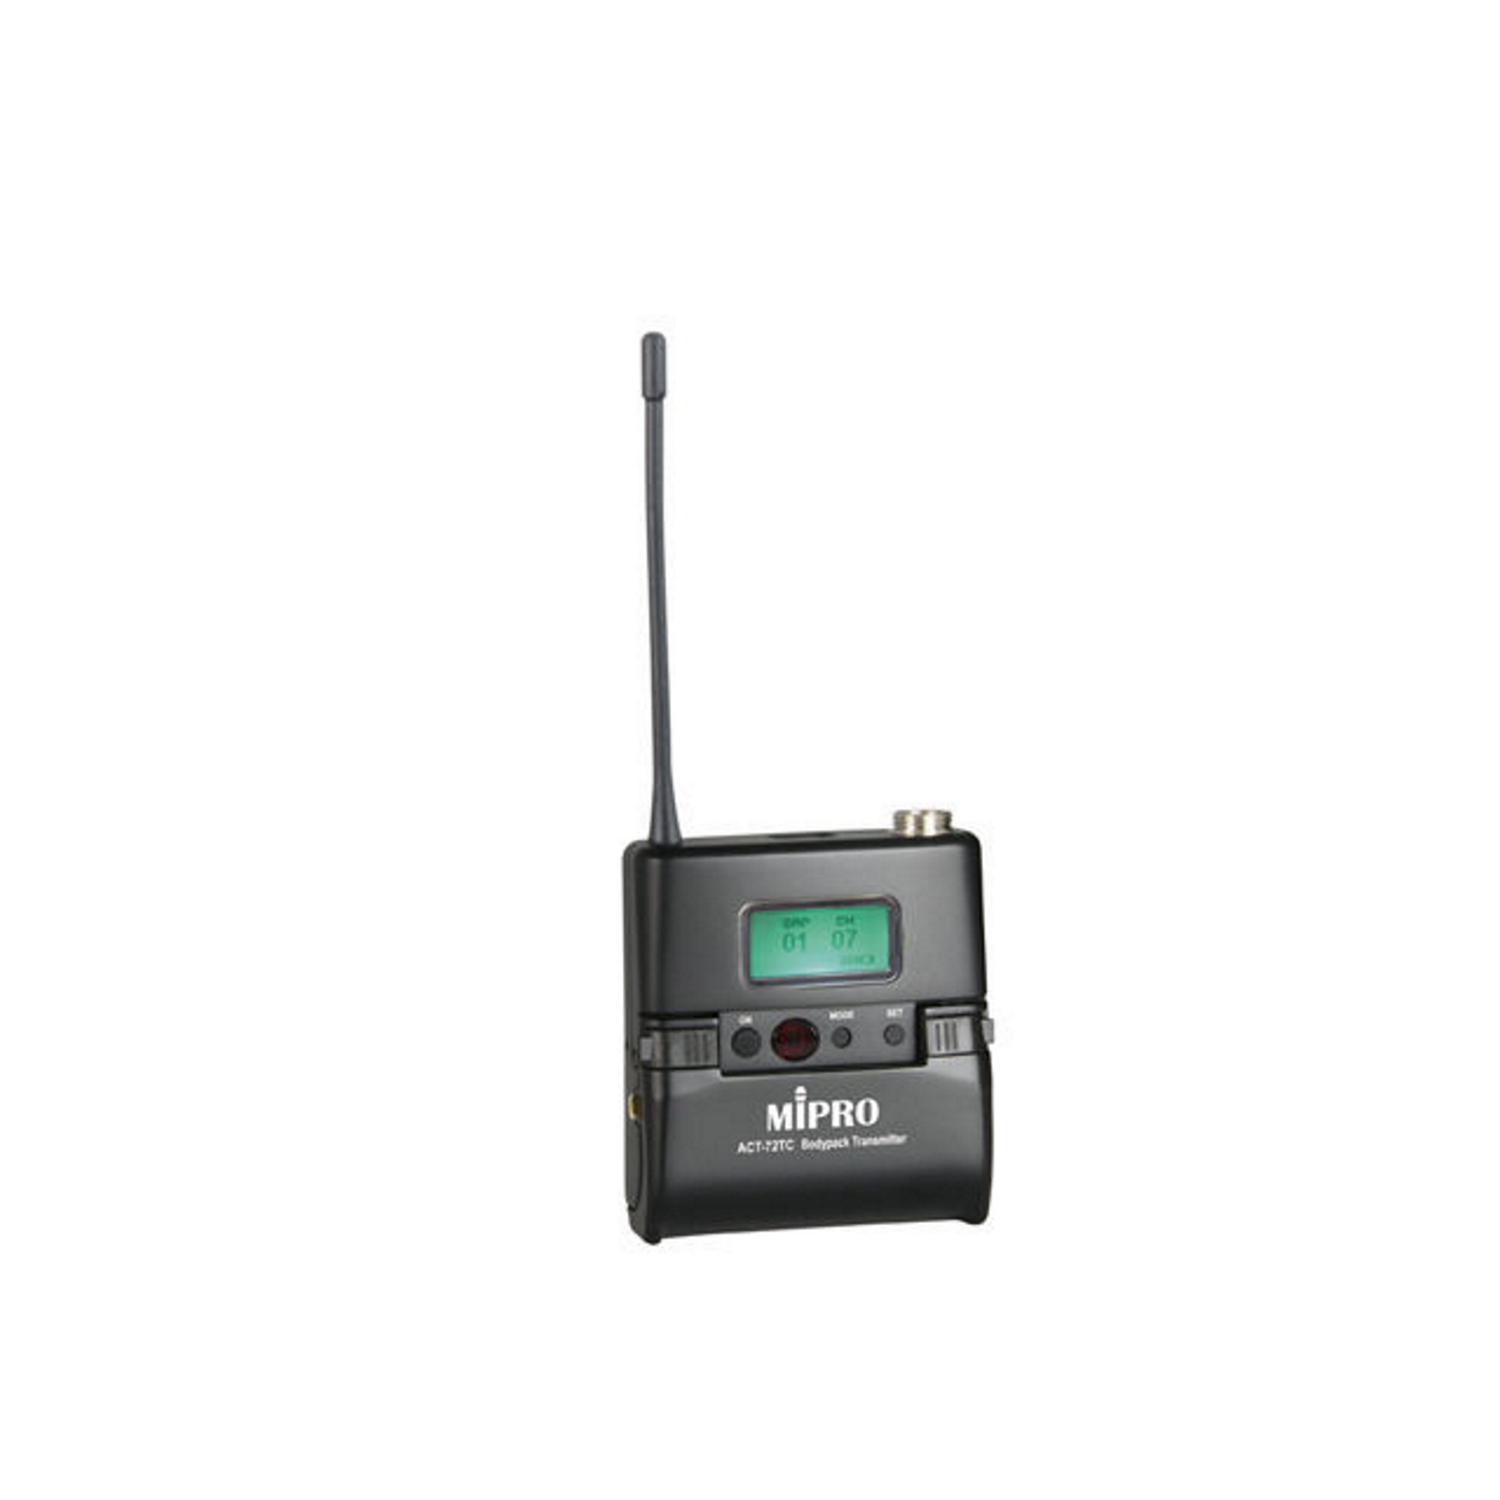 ACT-72T 644 - 668 MHz pocket transmitter